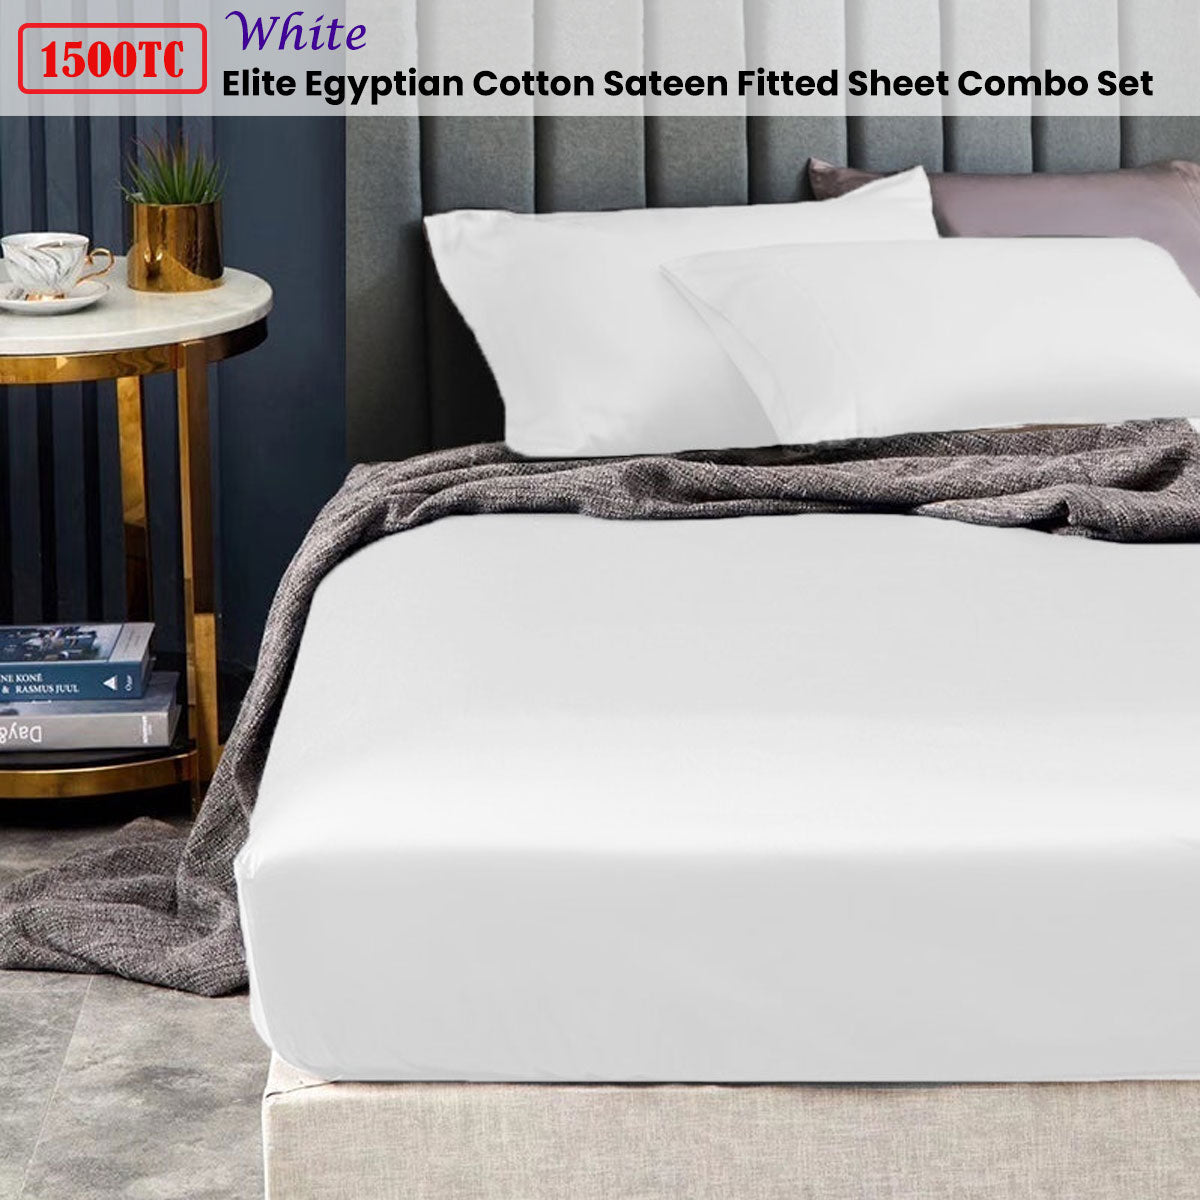 1500TC Elite Egyptian Cotton Sateen Fitted Sheet Combo Set White Single